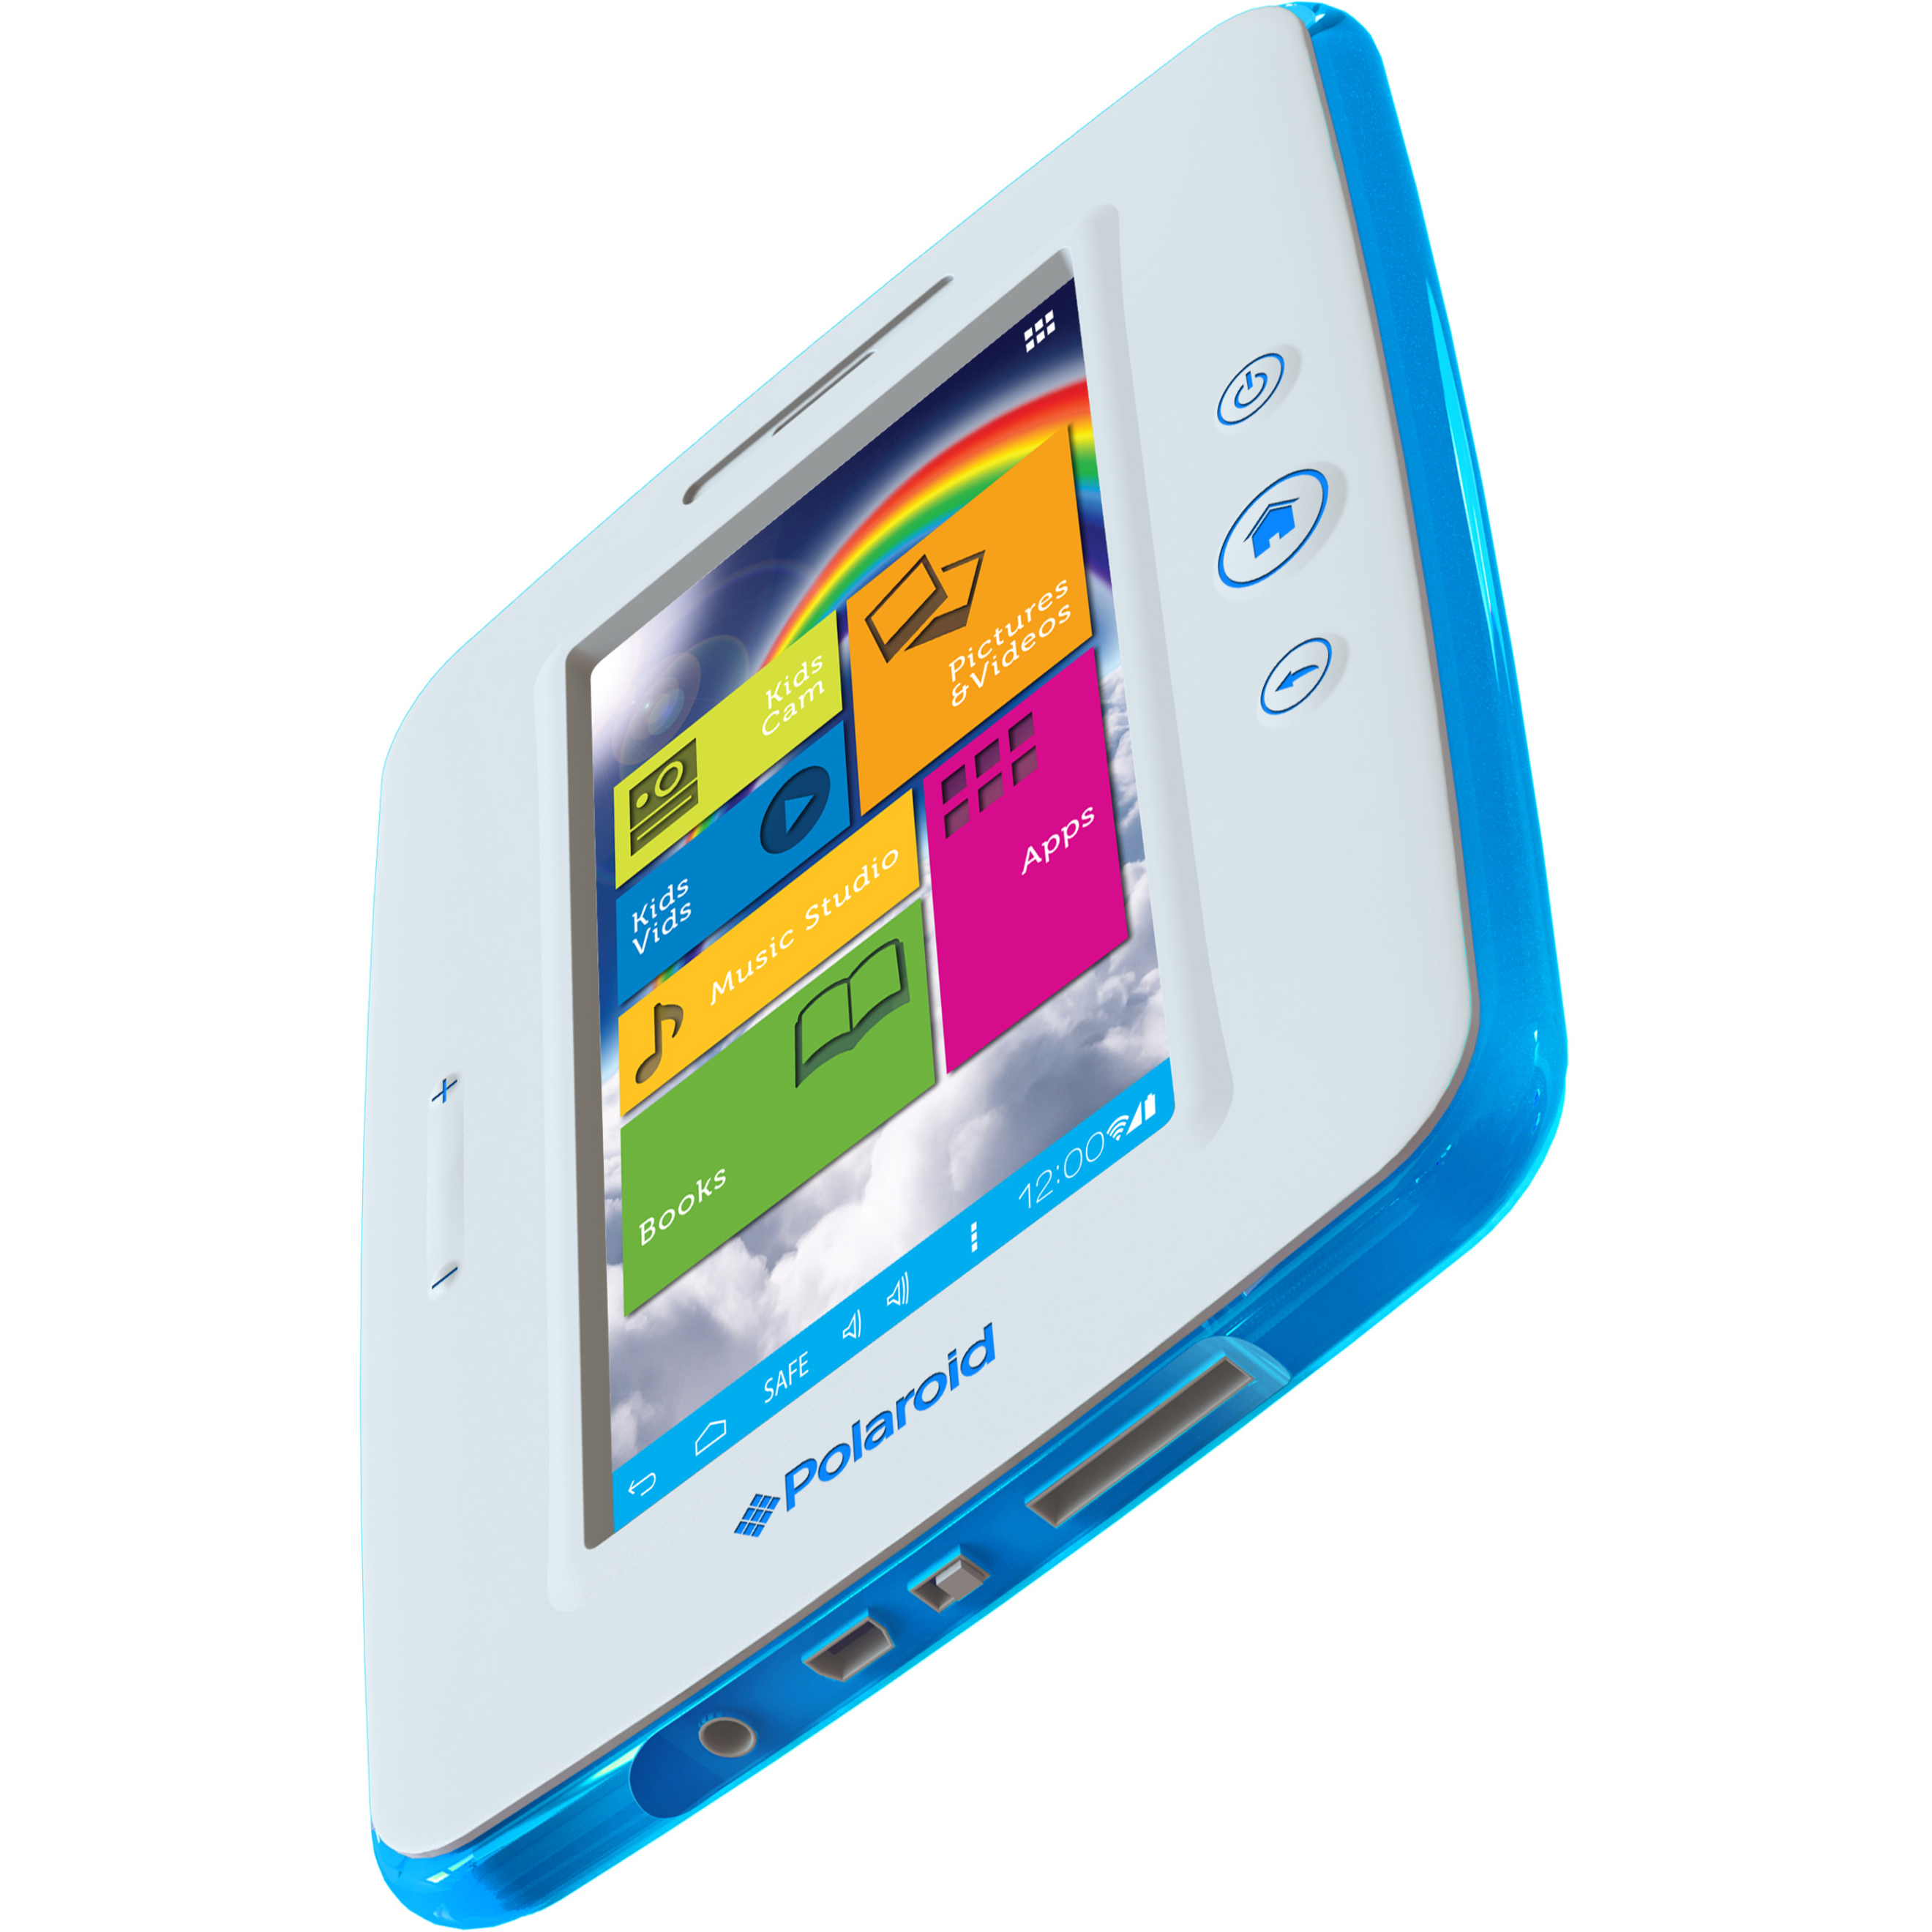 STI PTAB750 Tablet, 7" WVGA, 512 MB, 8 GB Storage, Android 4.0 Ice Cream Sandwich - image 5 of 5